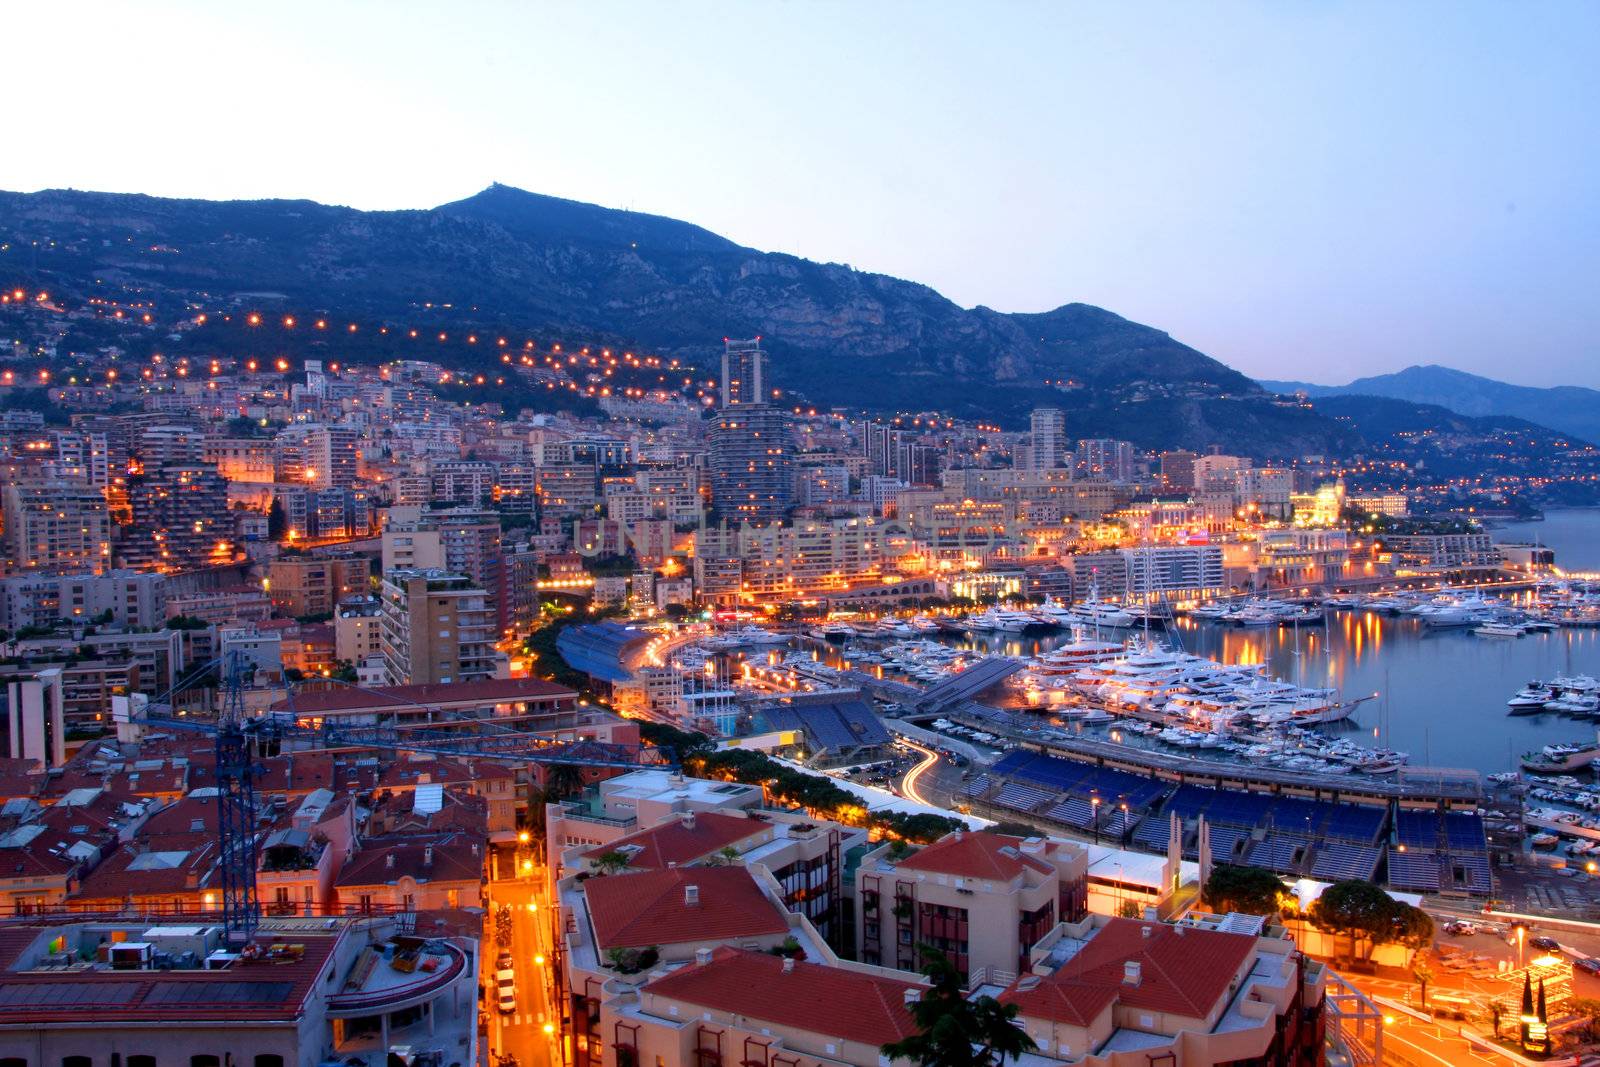 View of Monaco at night